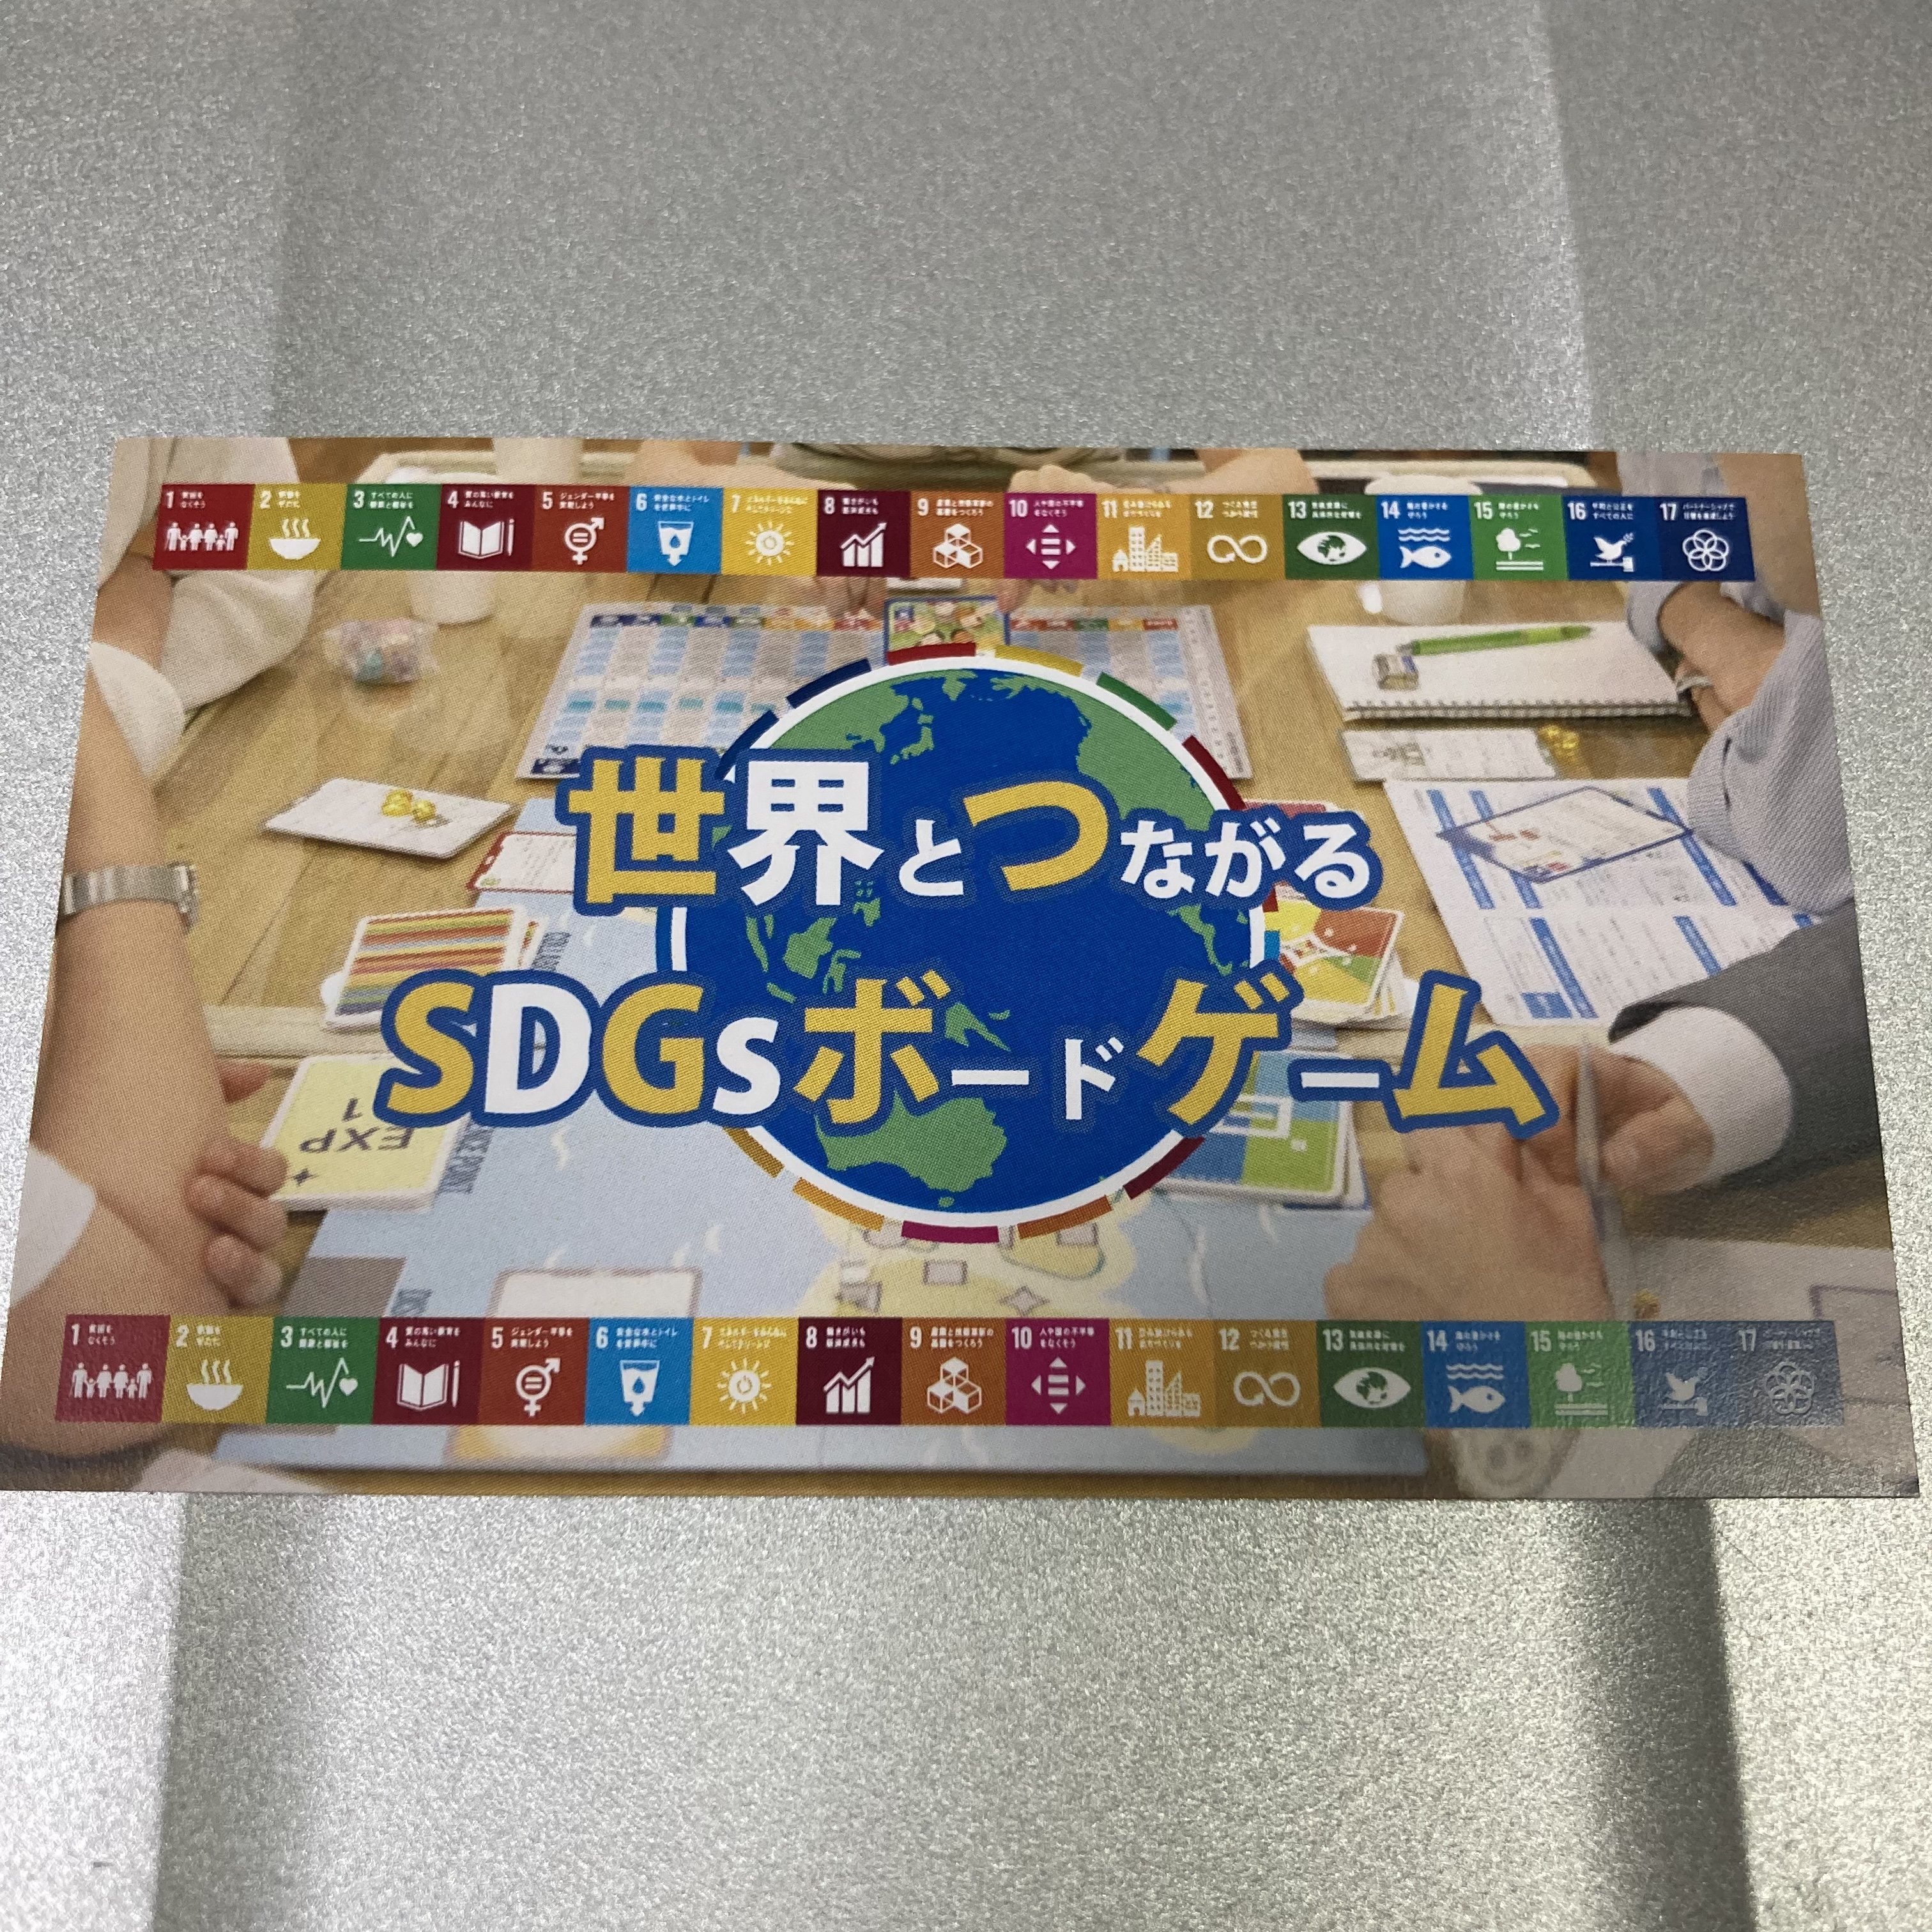 SDG'sボードゲームチケット&ツクツクカレーランチ会